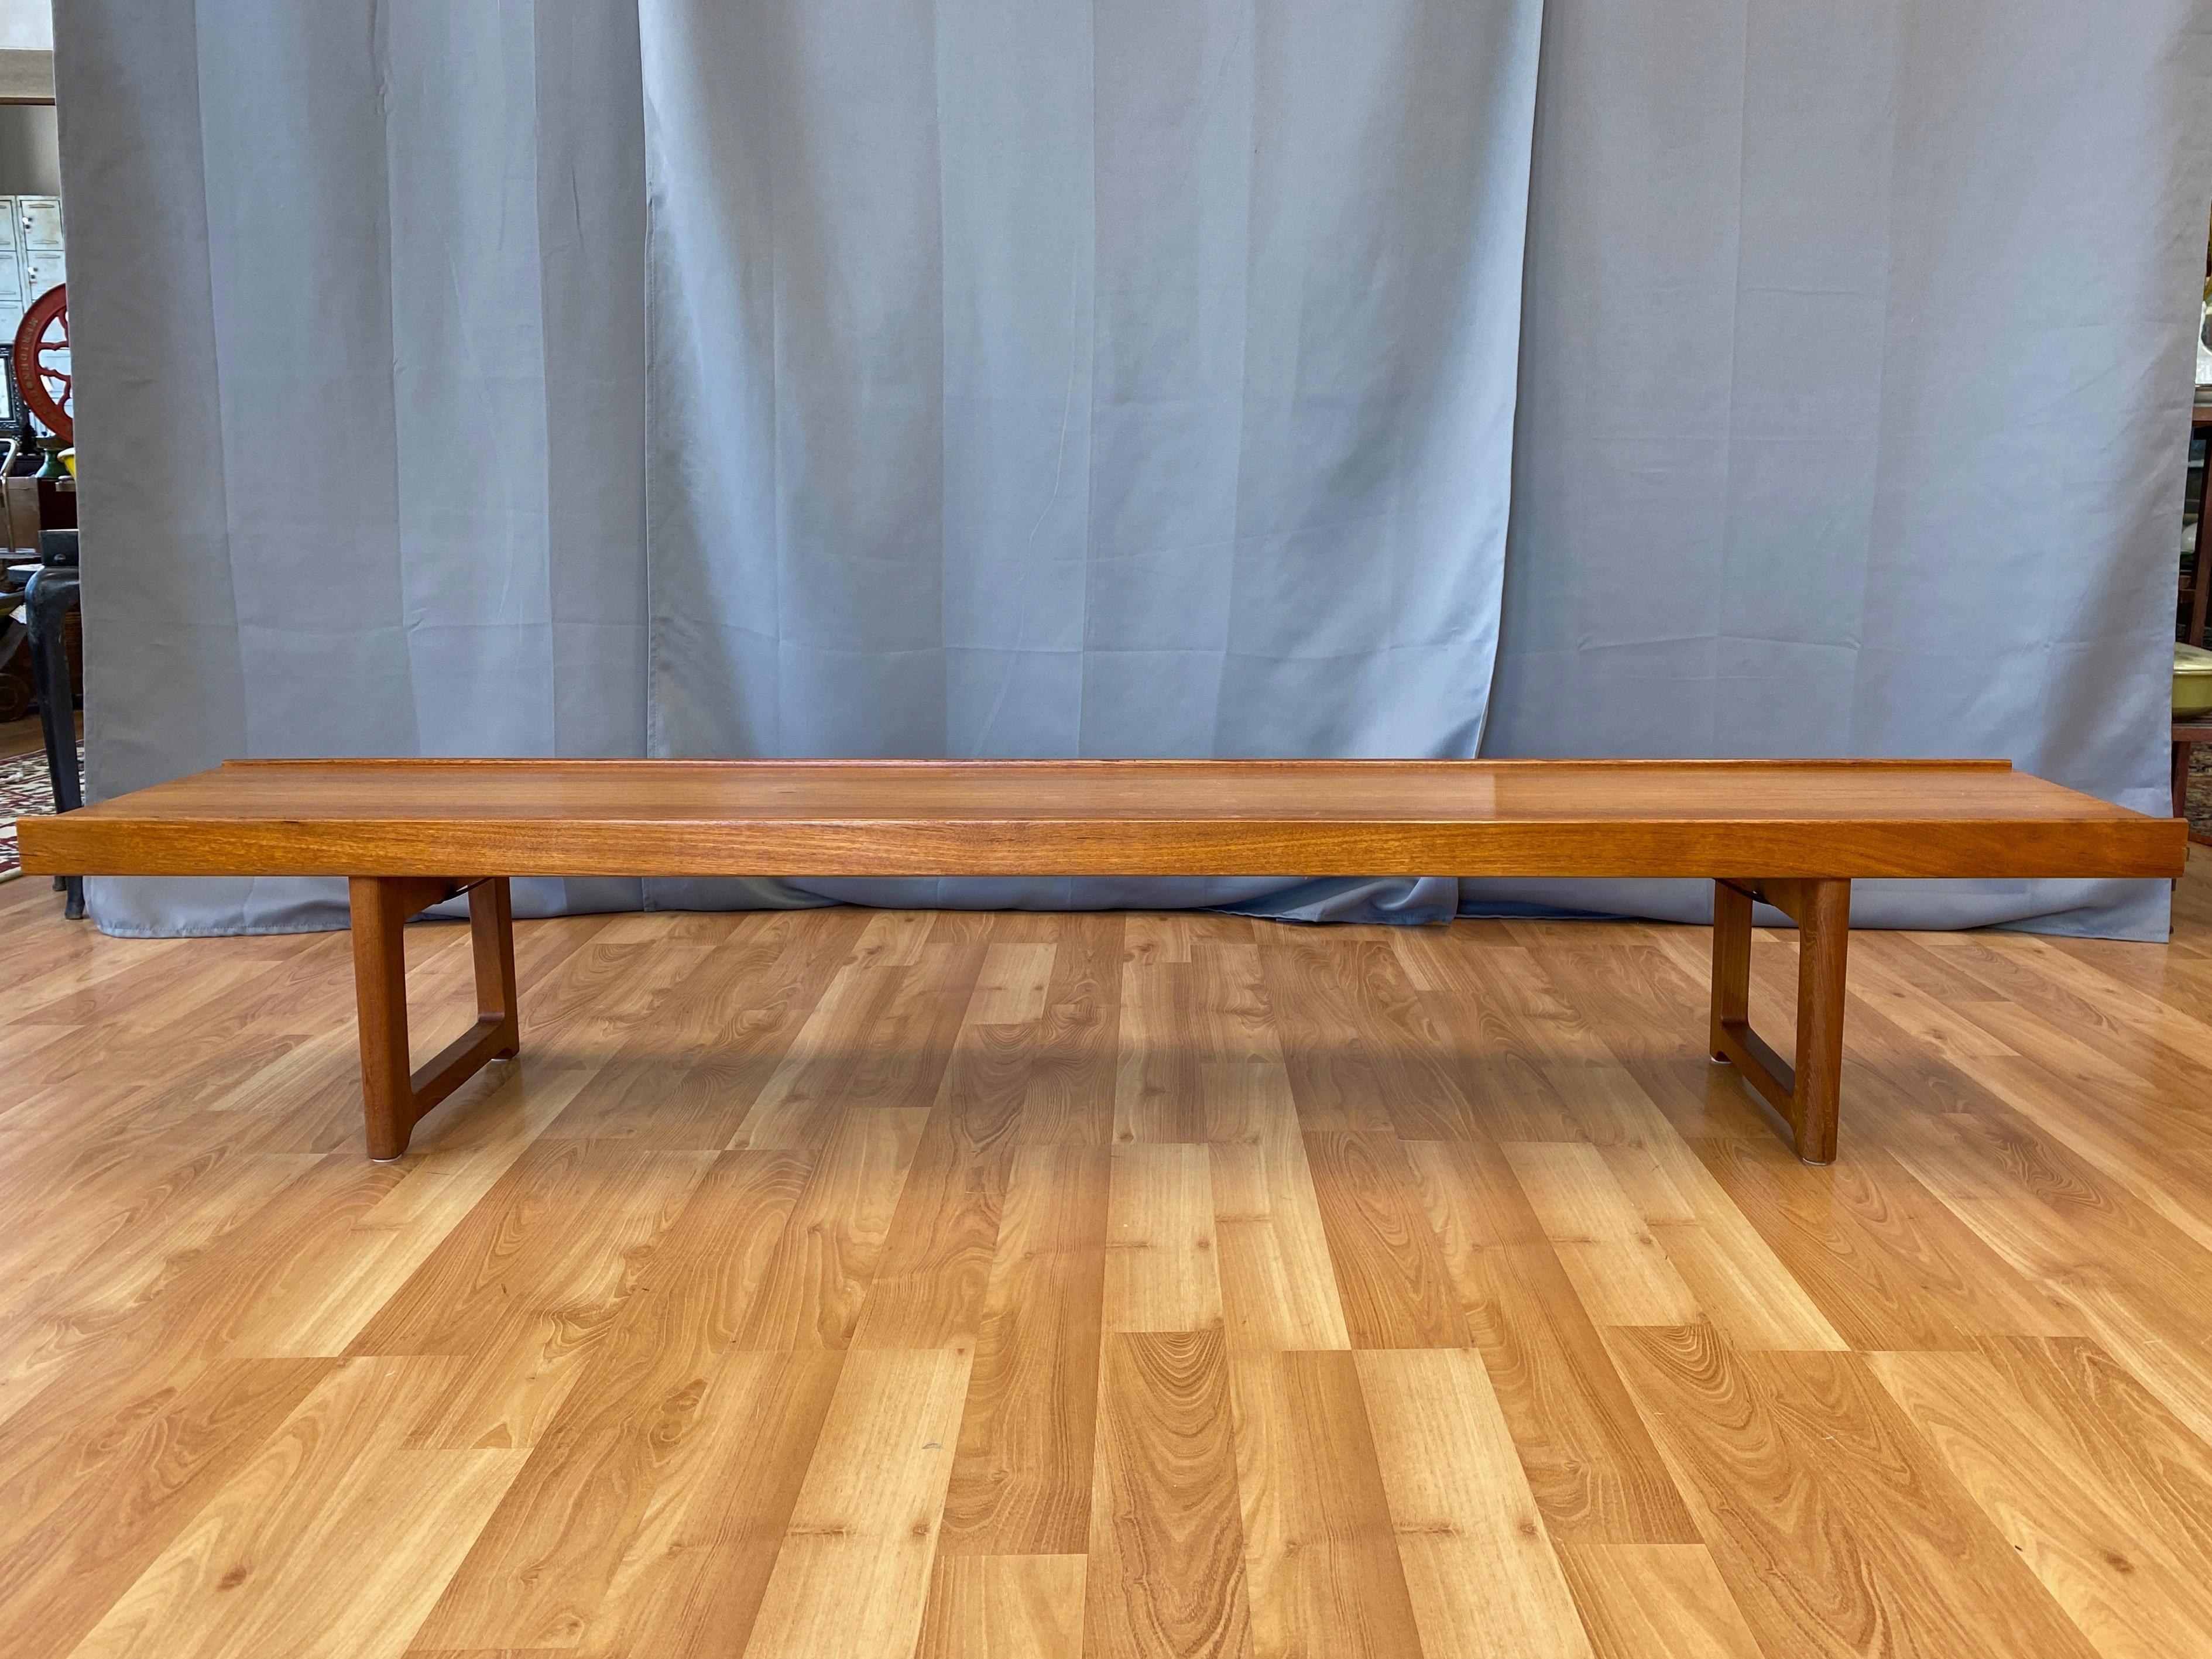 An expansive 1950s Scandinavian Modern “Krobo” low teak bench or coffee table by Torbjørn Afdal for Mellemstrands Trevareindustri and produced by Bruksbo.

Freshly refinished top with golden, subtly figured bookmatched teak that's a bit darker